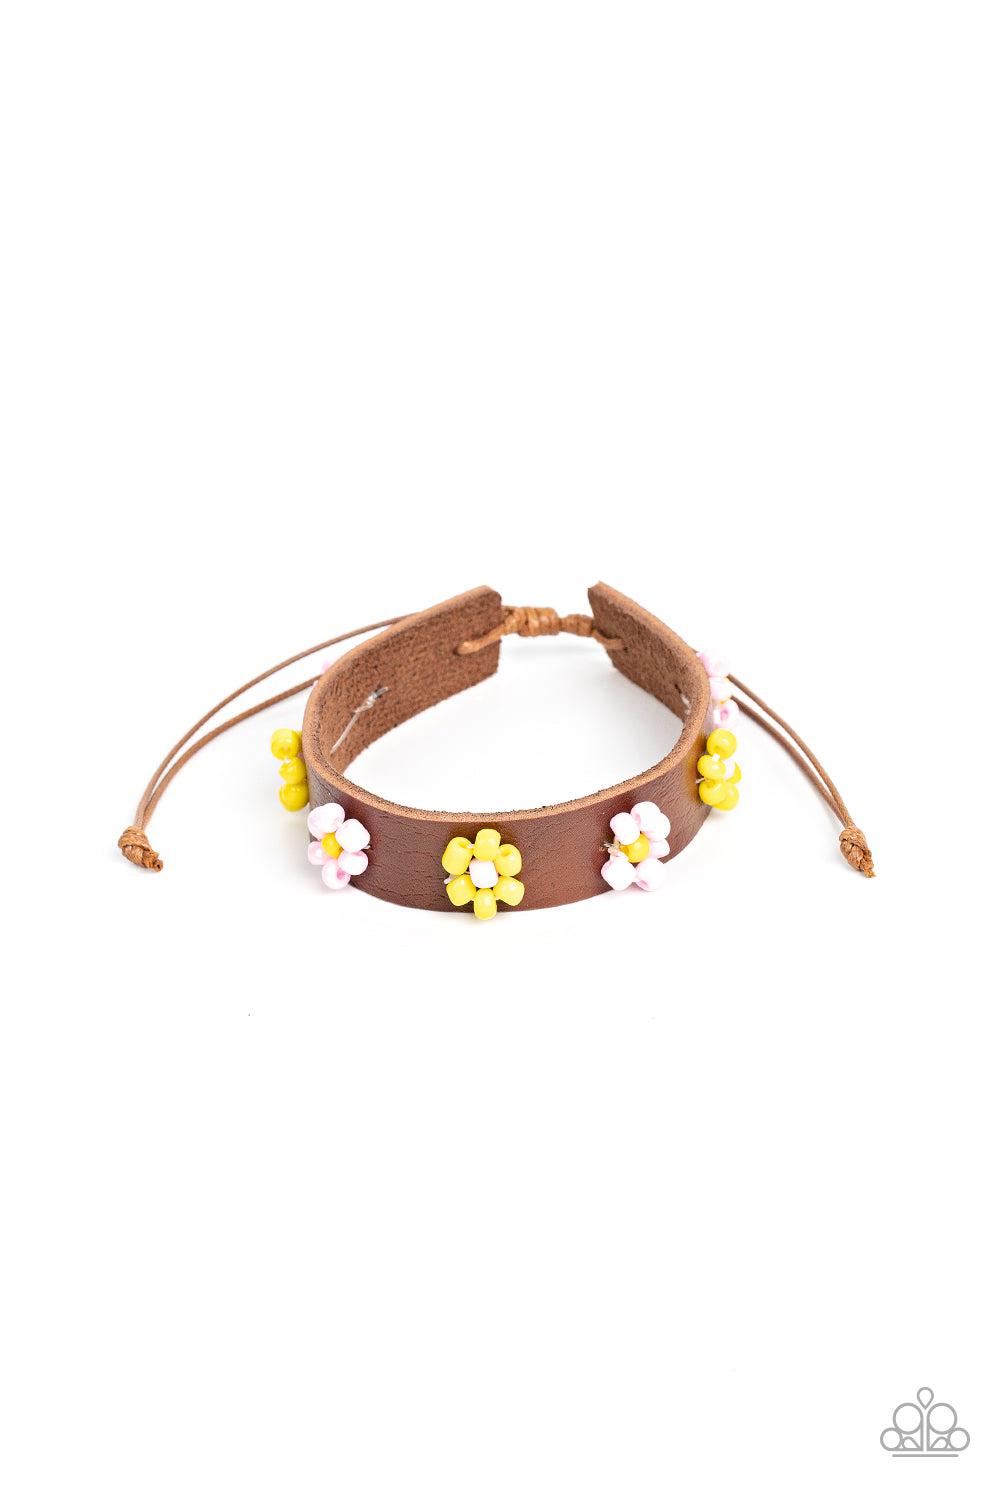 Flowery Frontier Pink &amp; Yellow Flower Urban Slide Bracelet- lightbox - CarasShop.com - $5 Jewelry by Cara Jewels